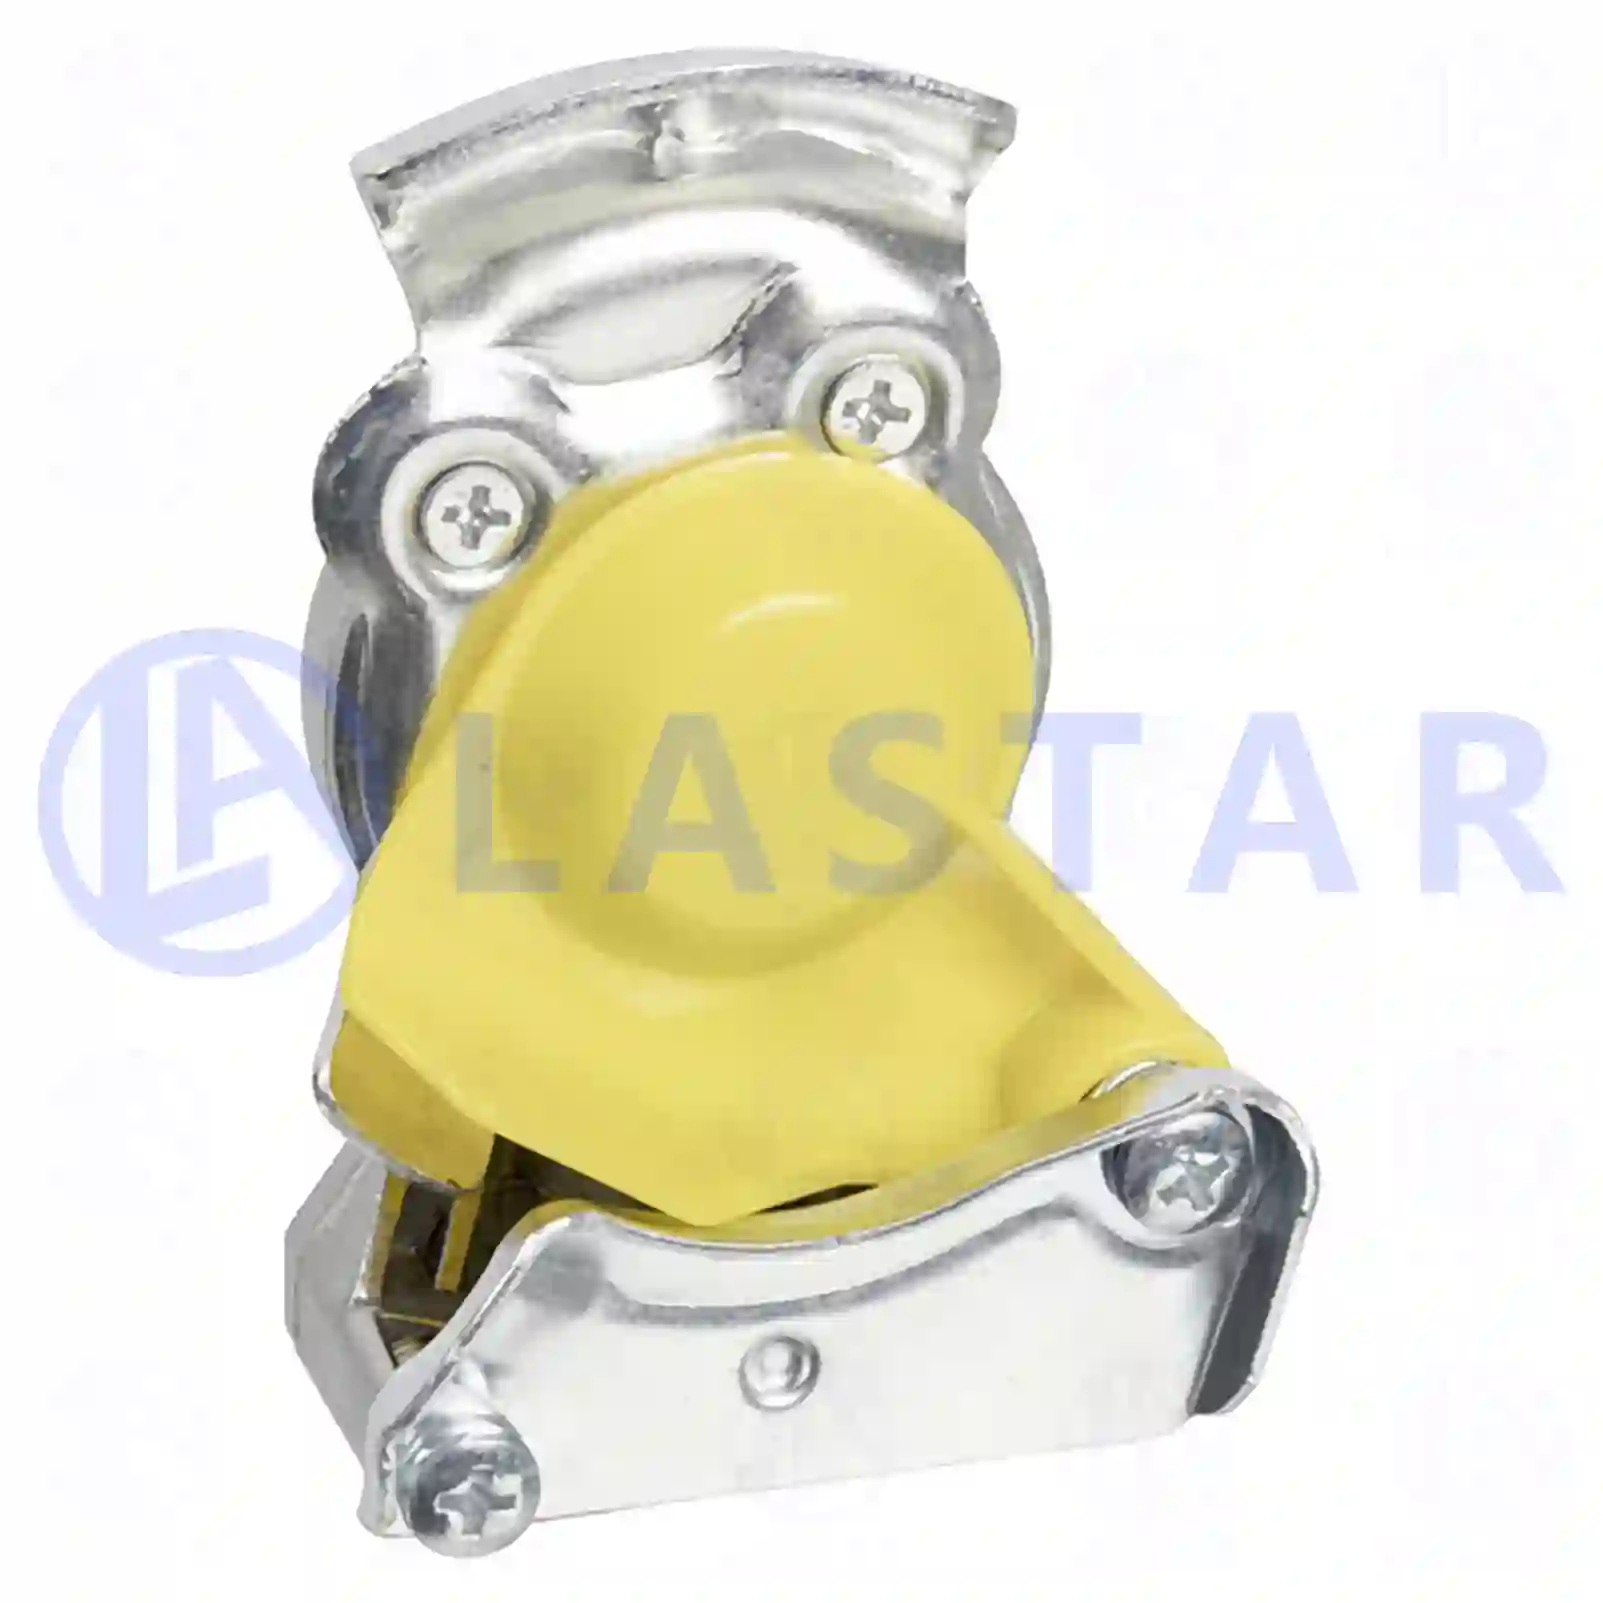  Palm coupling, automatic shutter, yellow lid || Lastar Spare Part | Truck Spare Parts, Auotomotive Spare Parts